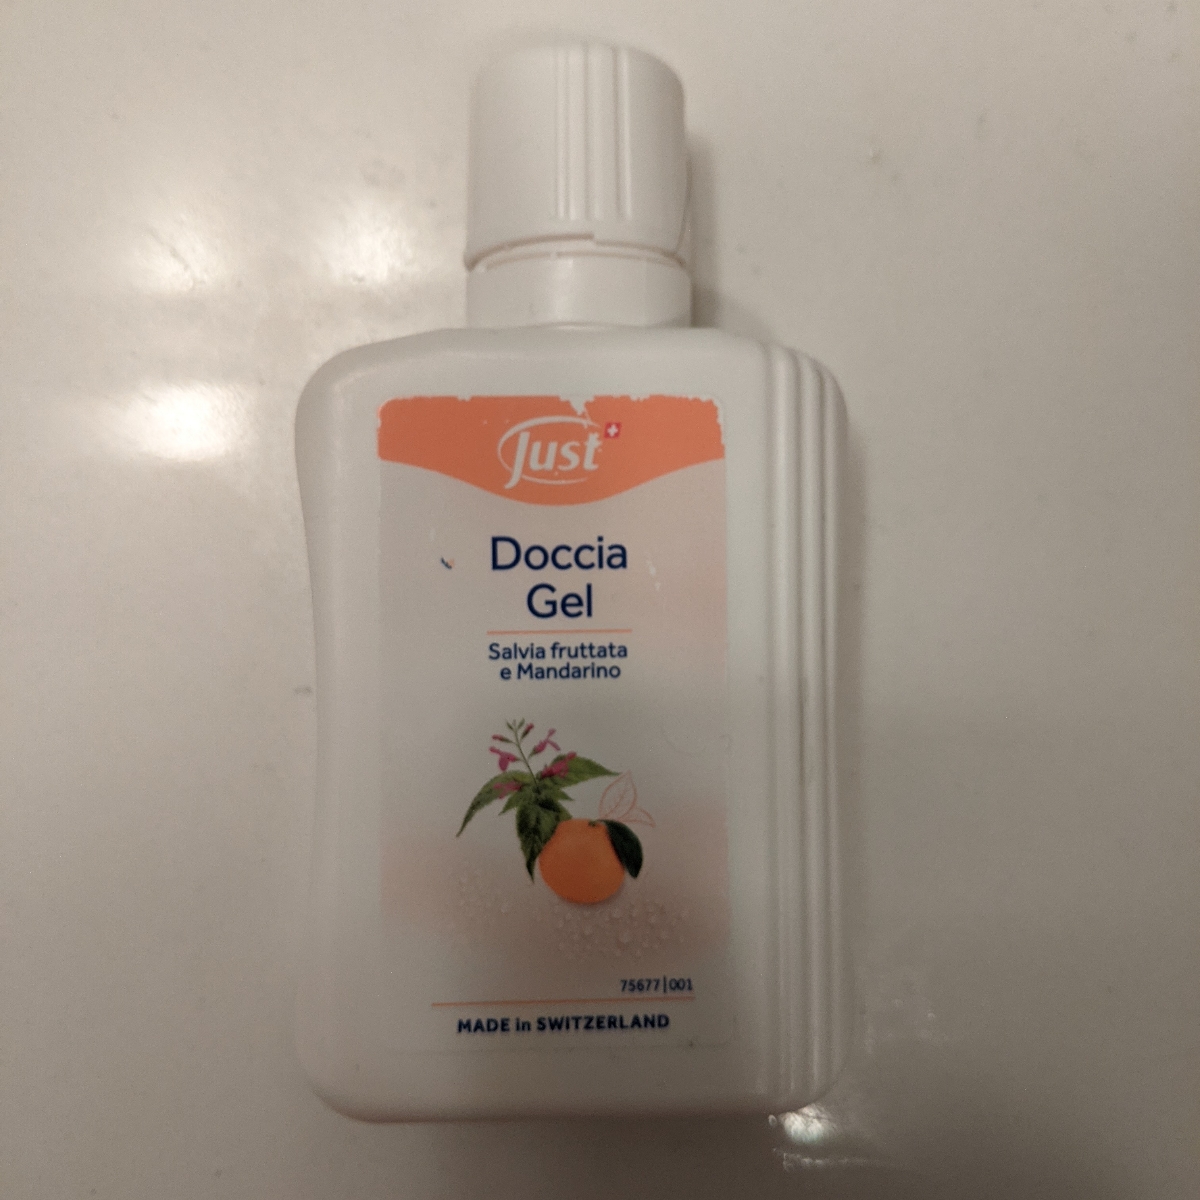 Just Doccia gel - salvia fruttata e mandarino Review | abillion